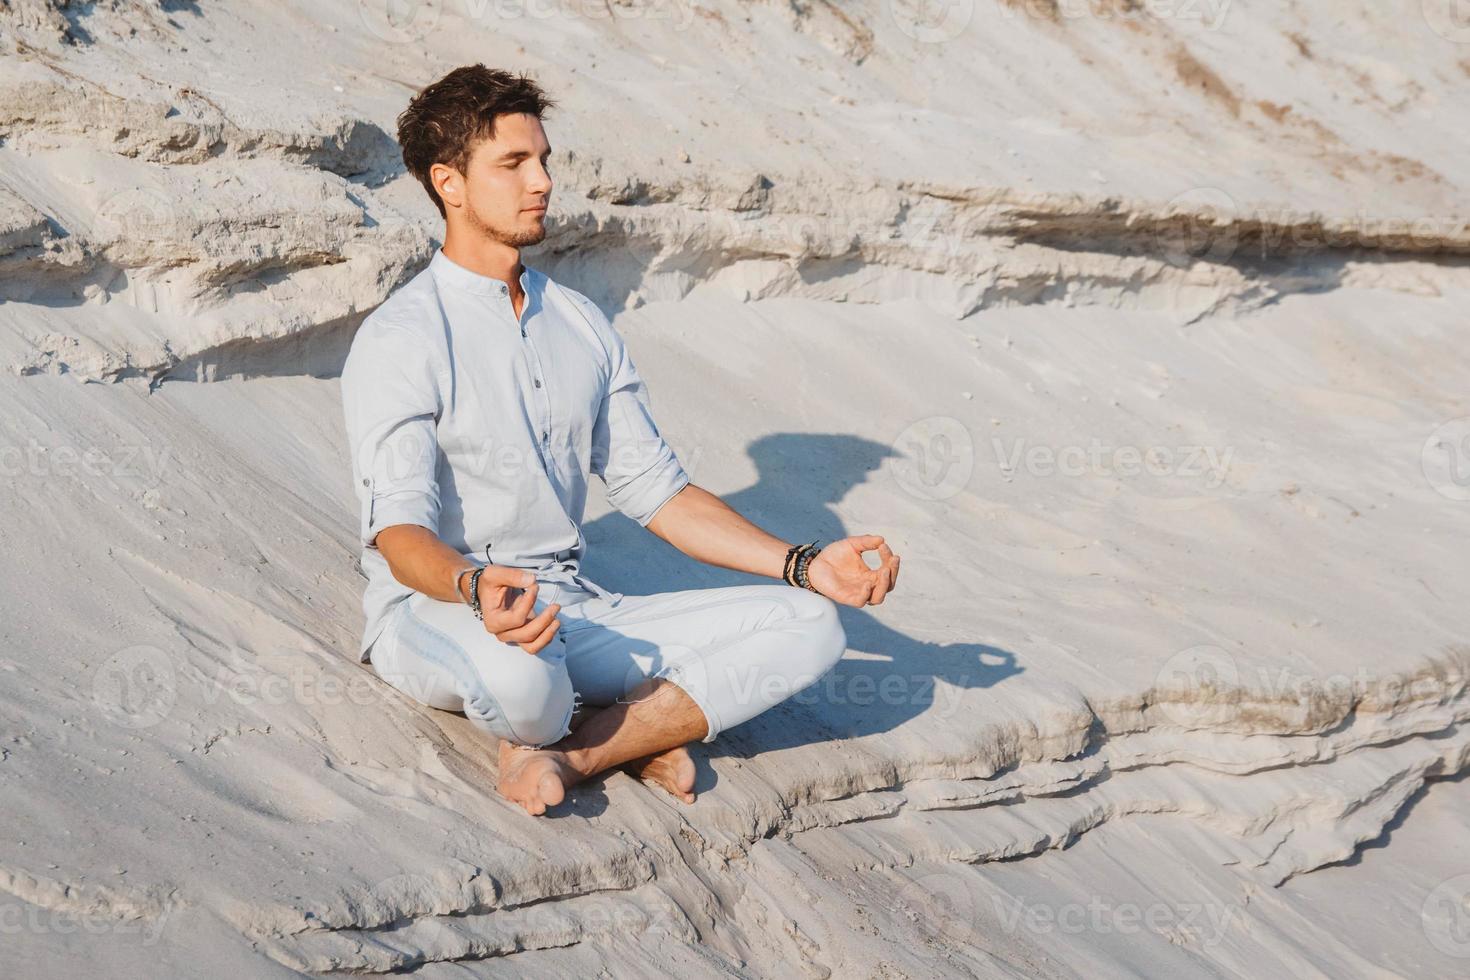 man zit in meditatiehouding op zandstrand foto